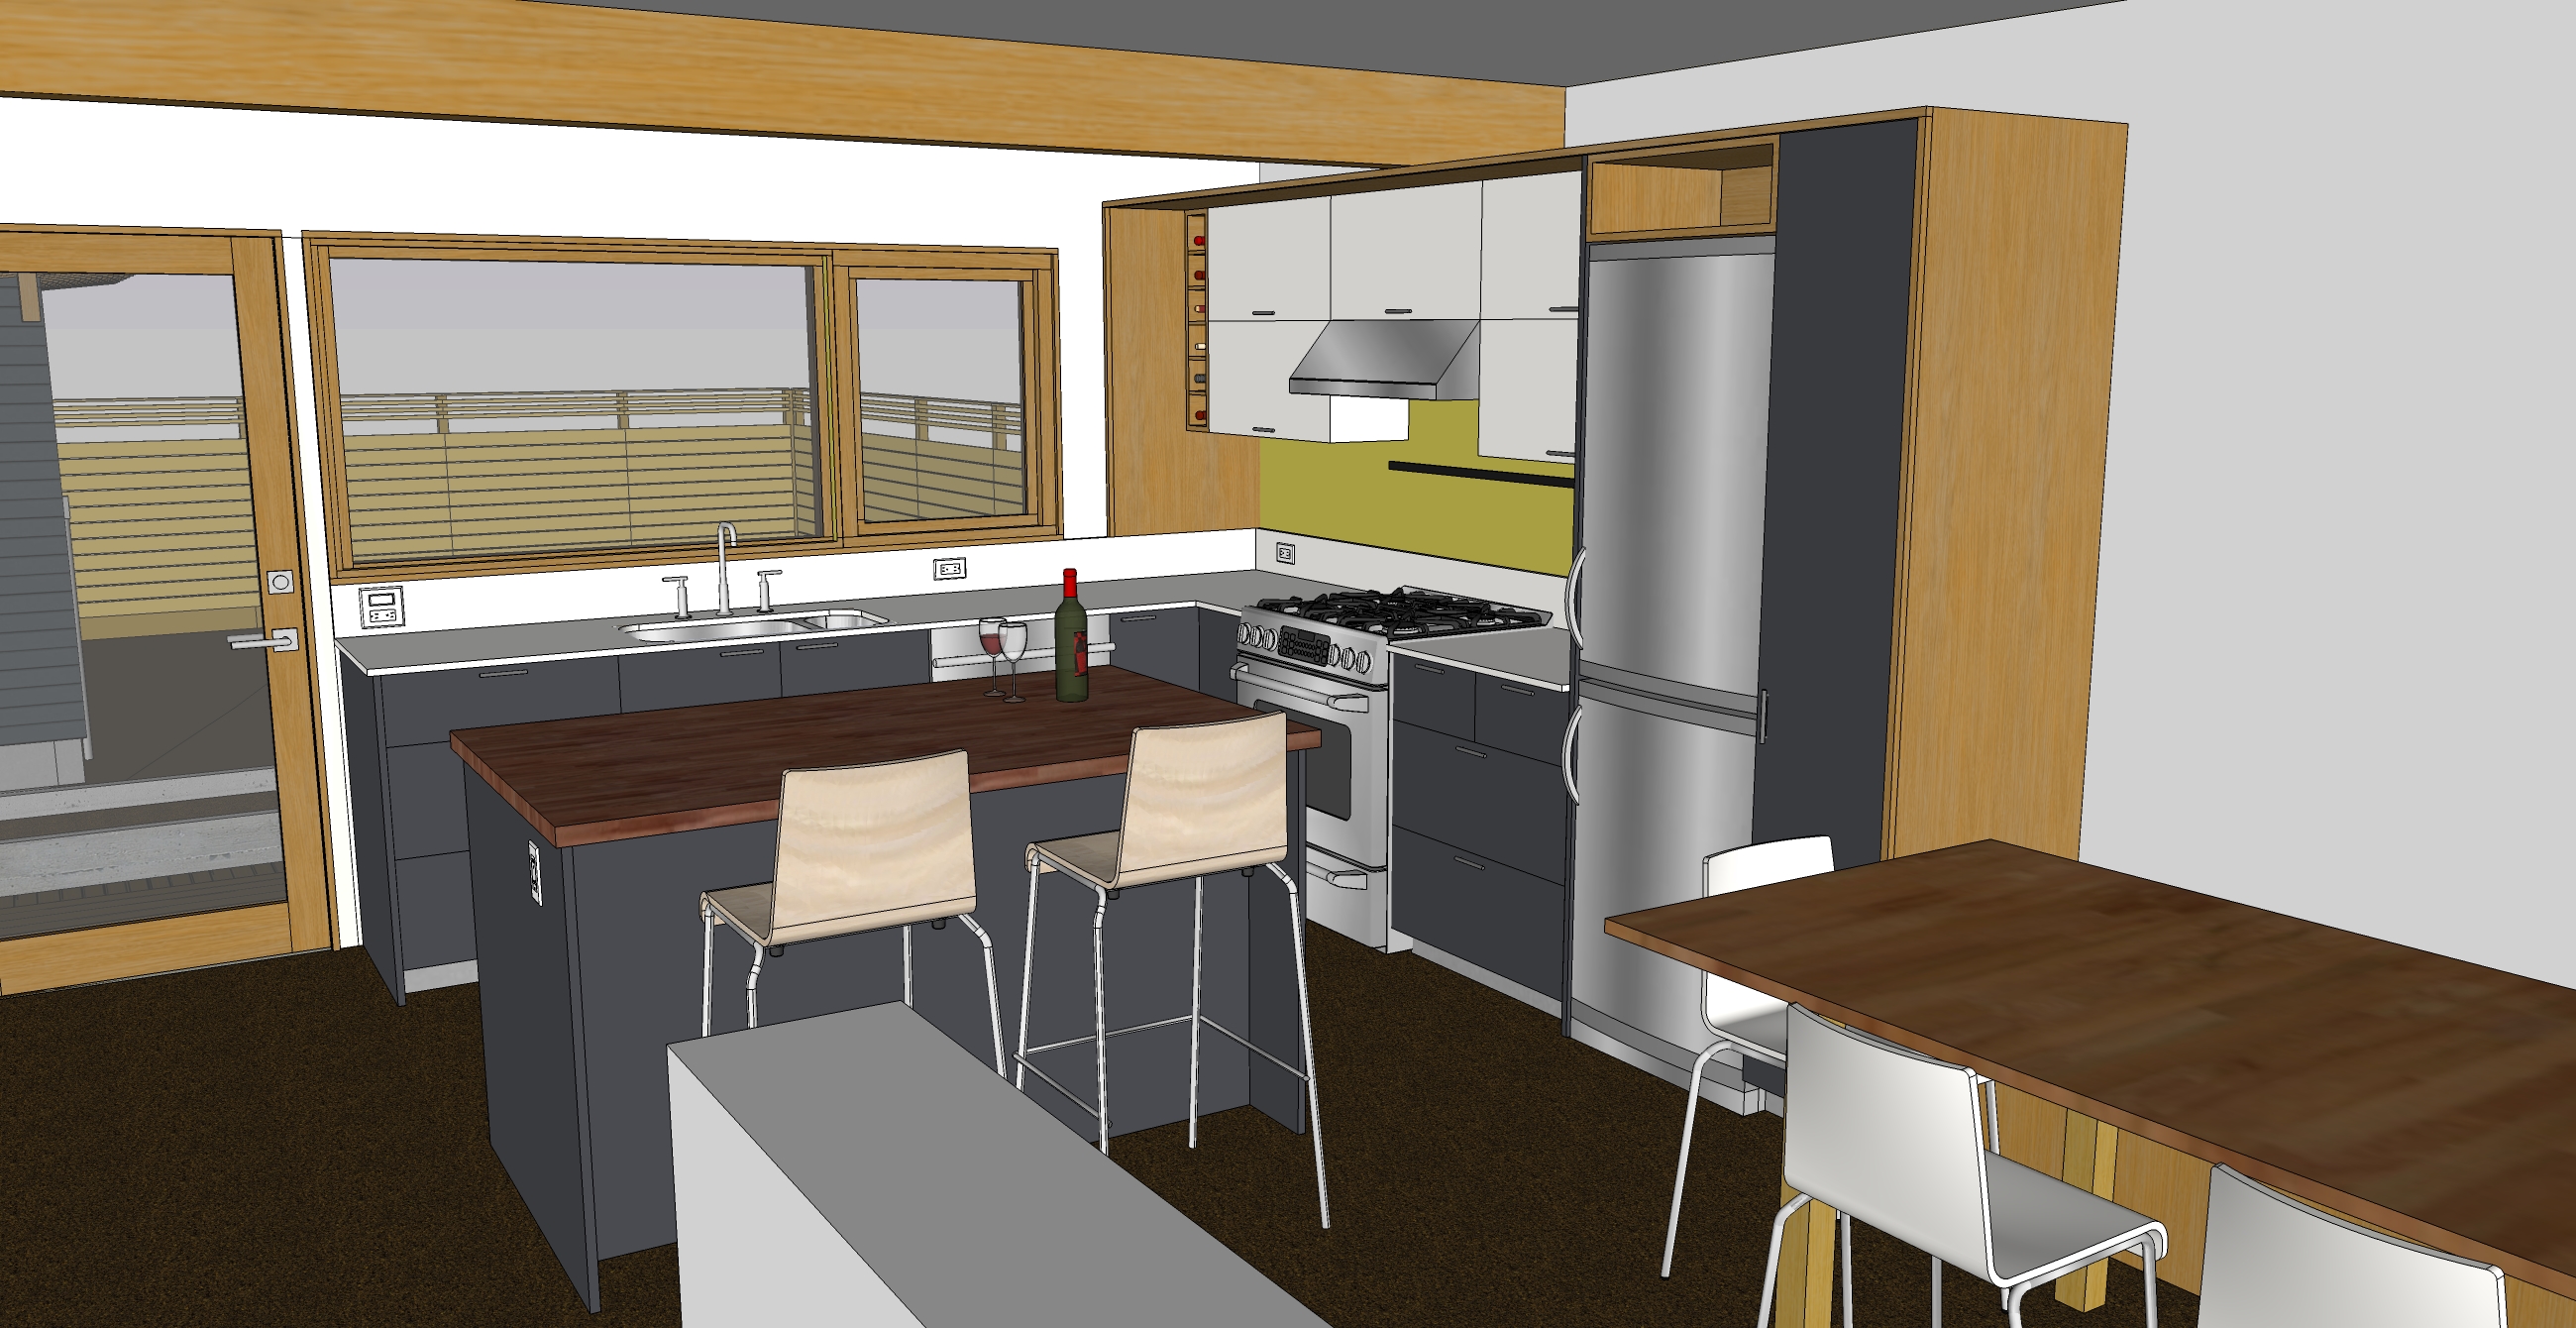 sketchup kitchen design